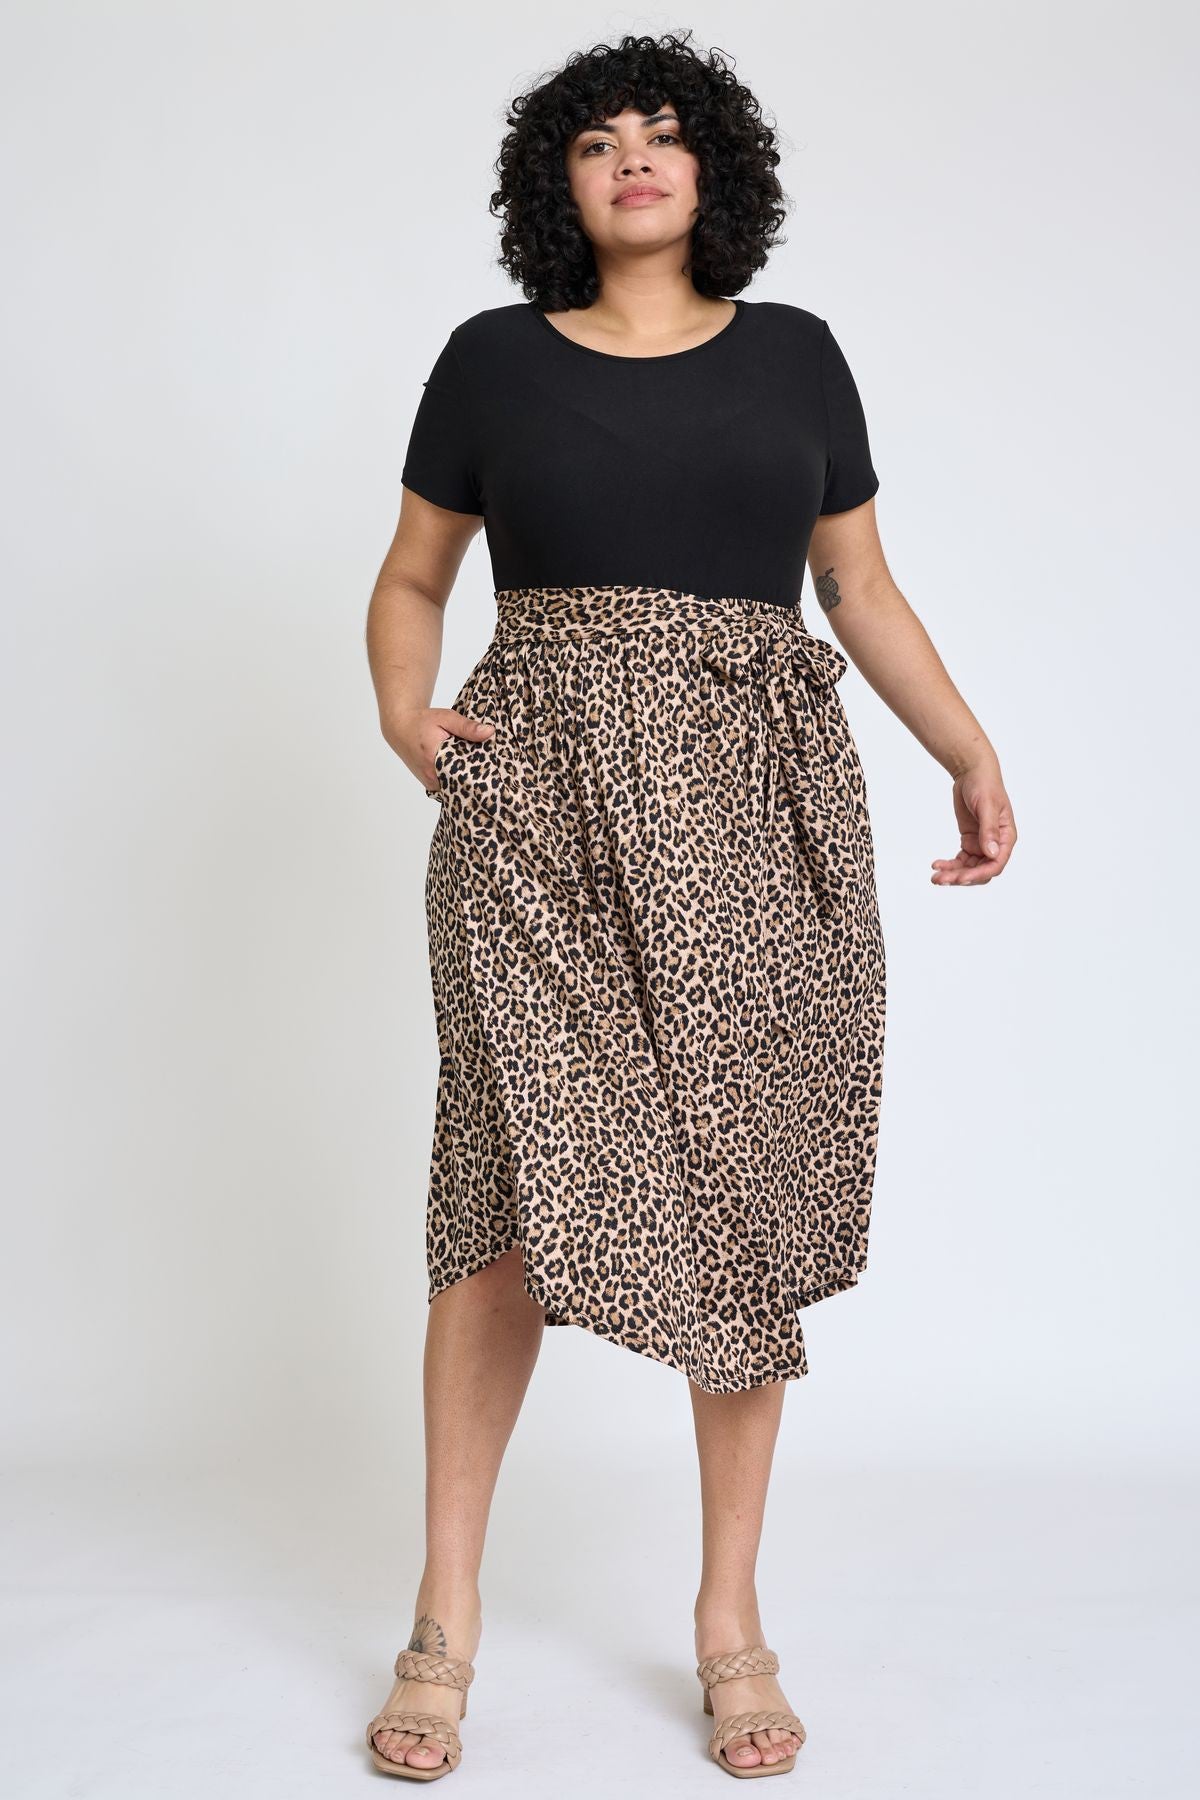 Curvy Eunice Contrast Knitted Leopard Dress